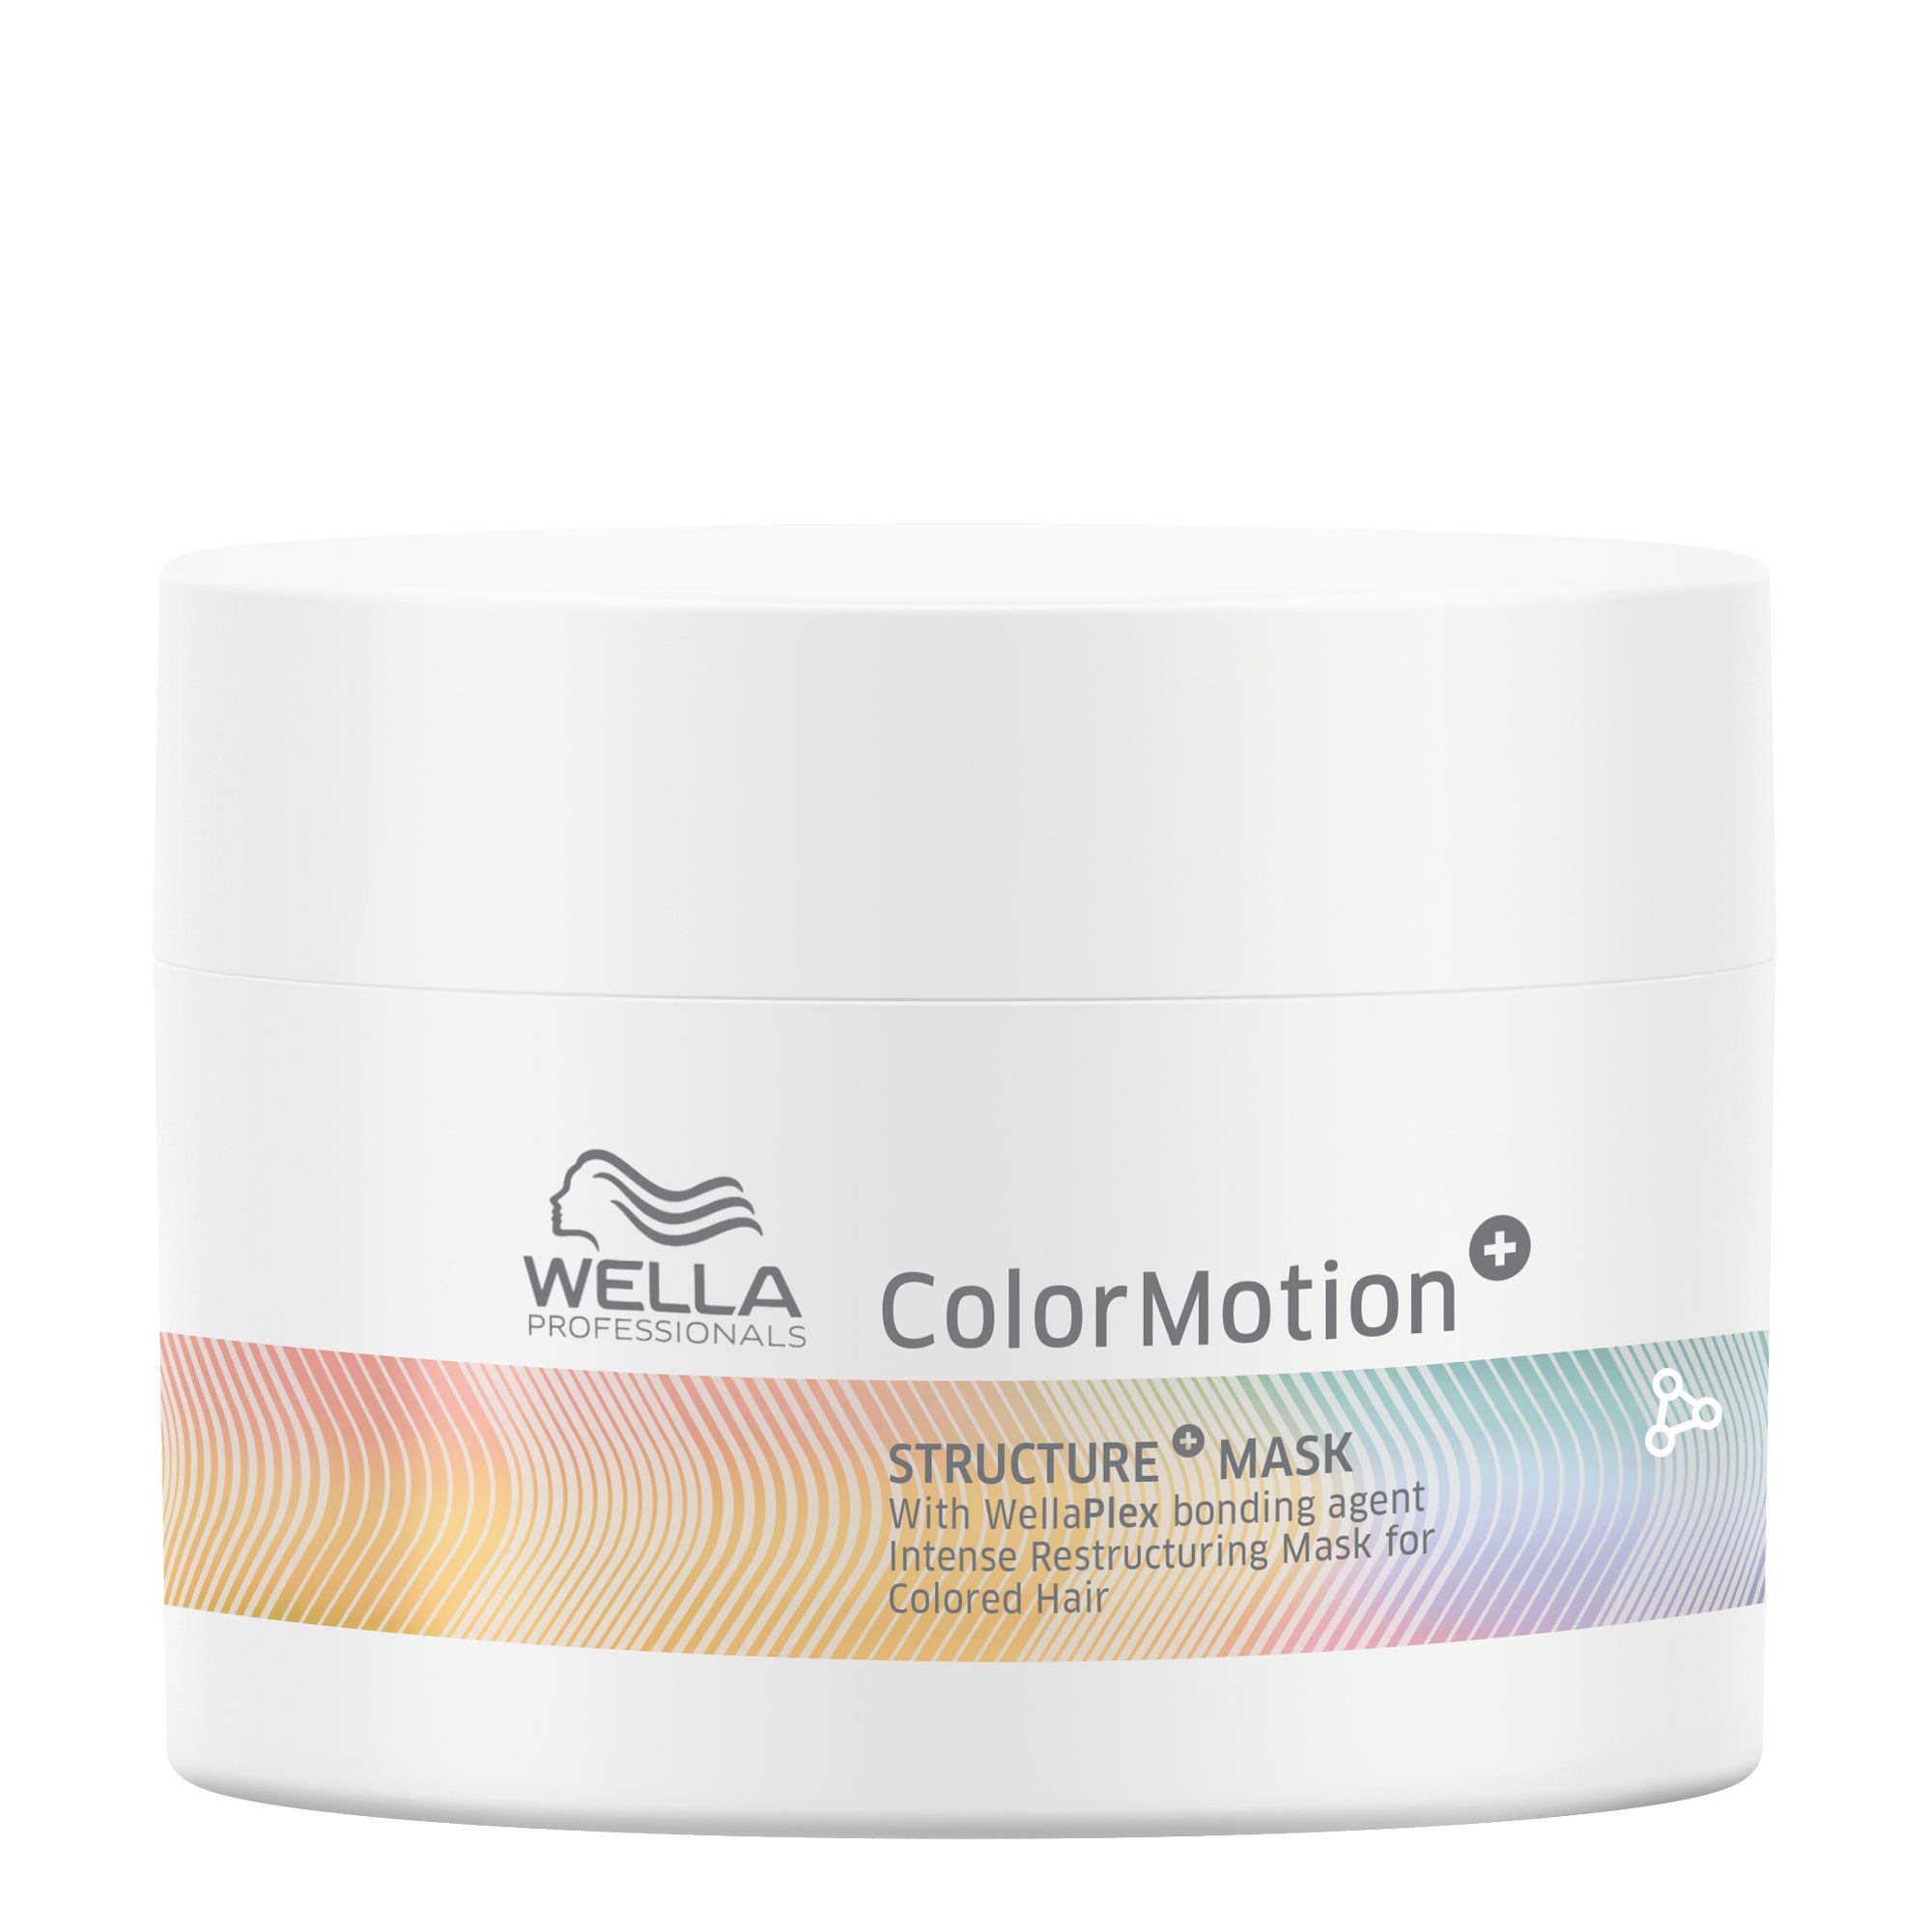 Wella ColorMotion+ Structure + Mask 5.07oz